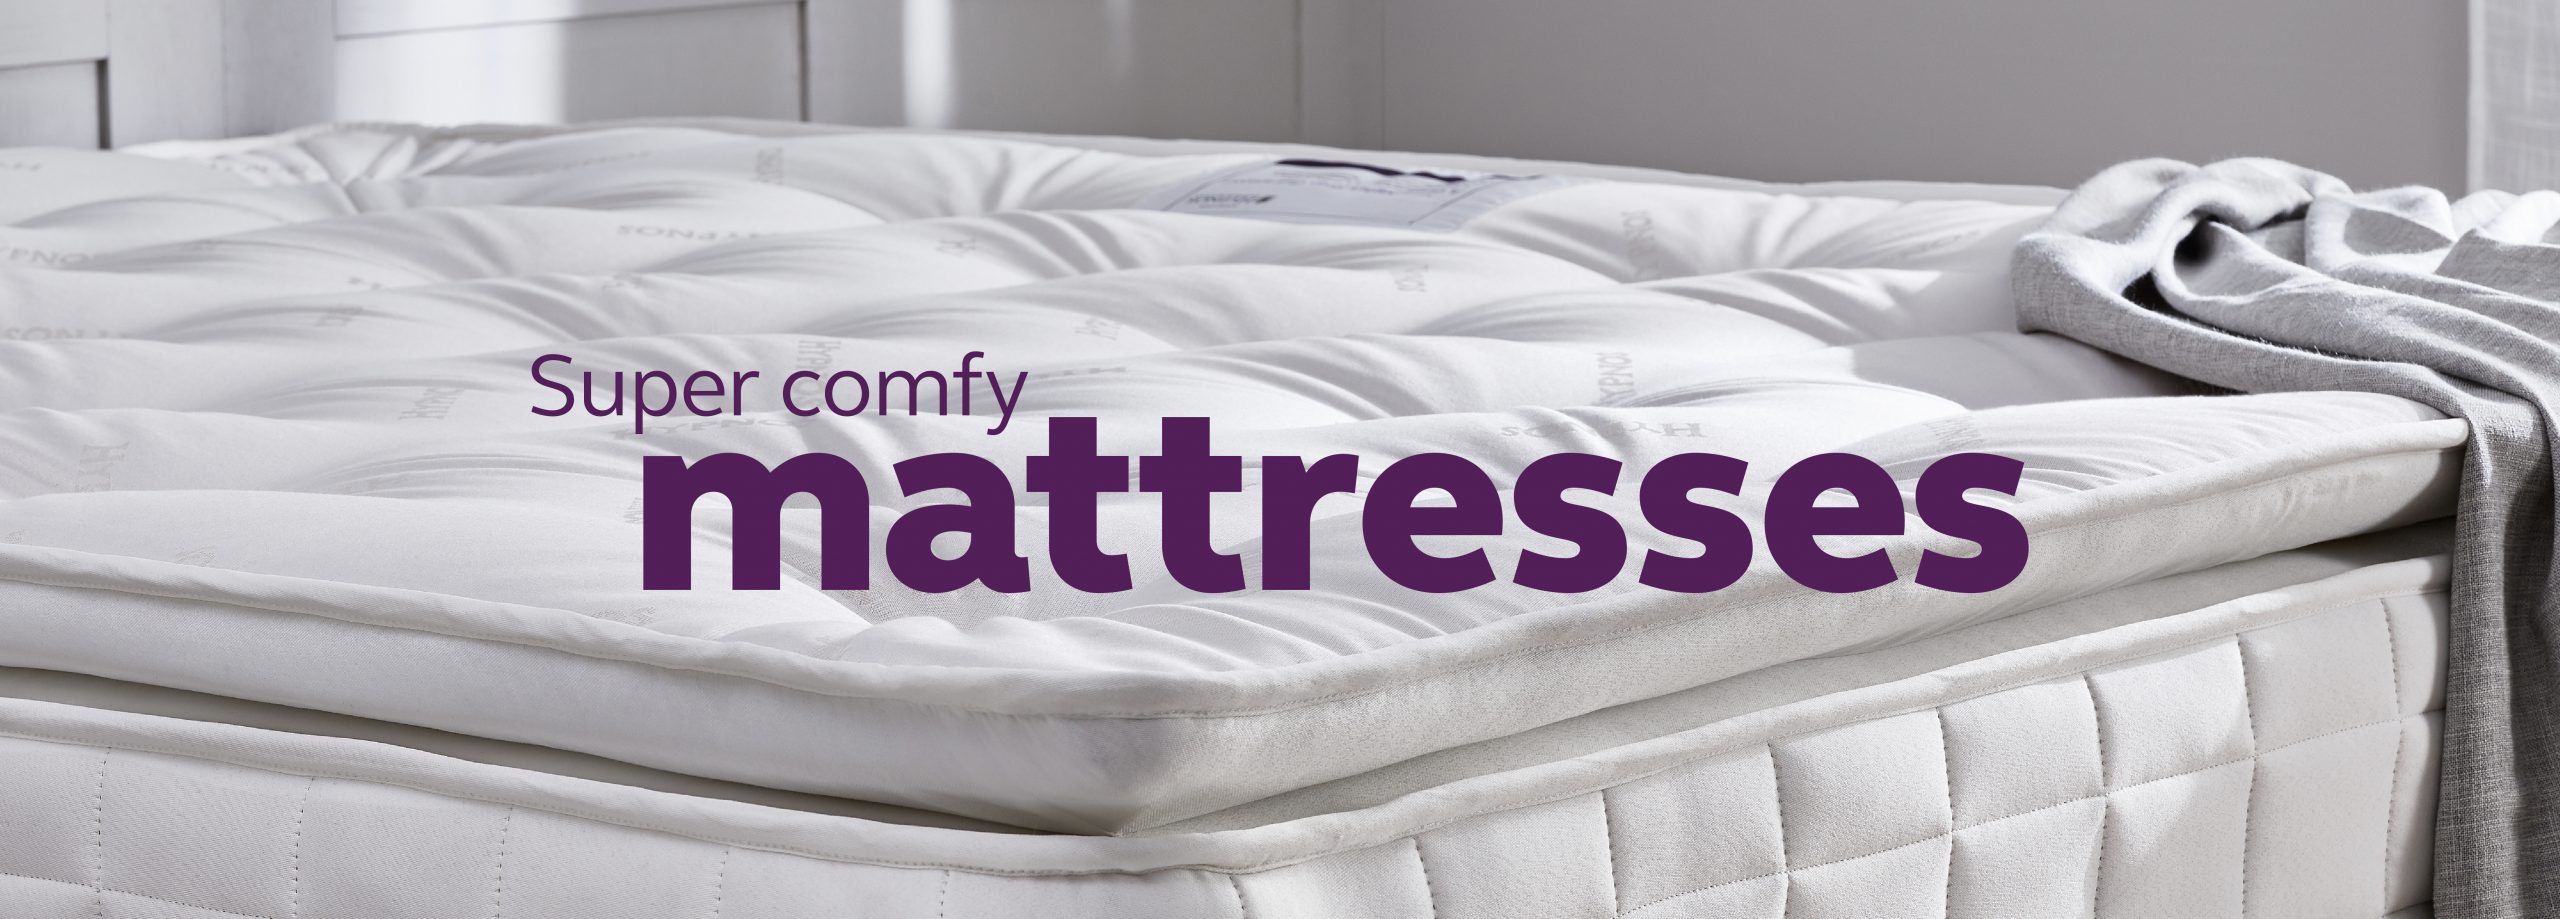 premier inn mattress discount